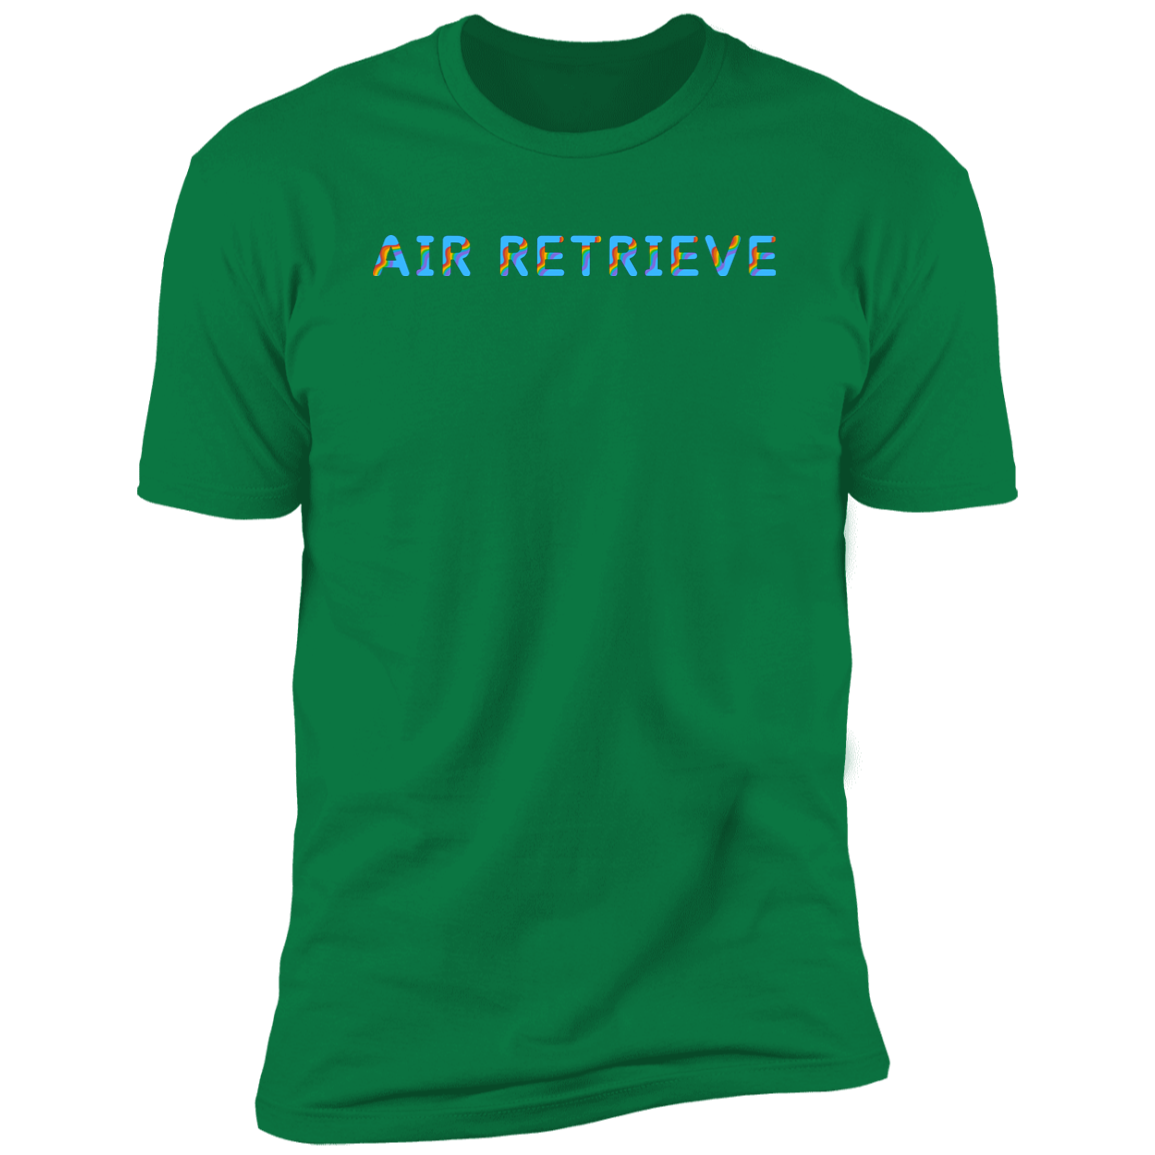 Air Retrieve Pride Dock diving t-shirt, dog pride air retrieve dock diving shirt for humans, in kelly green